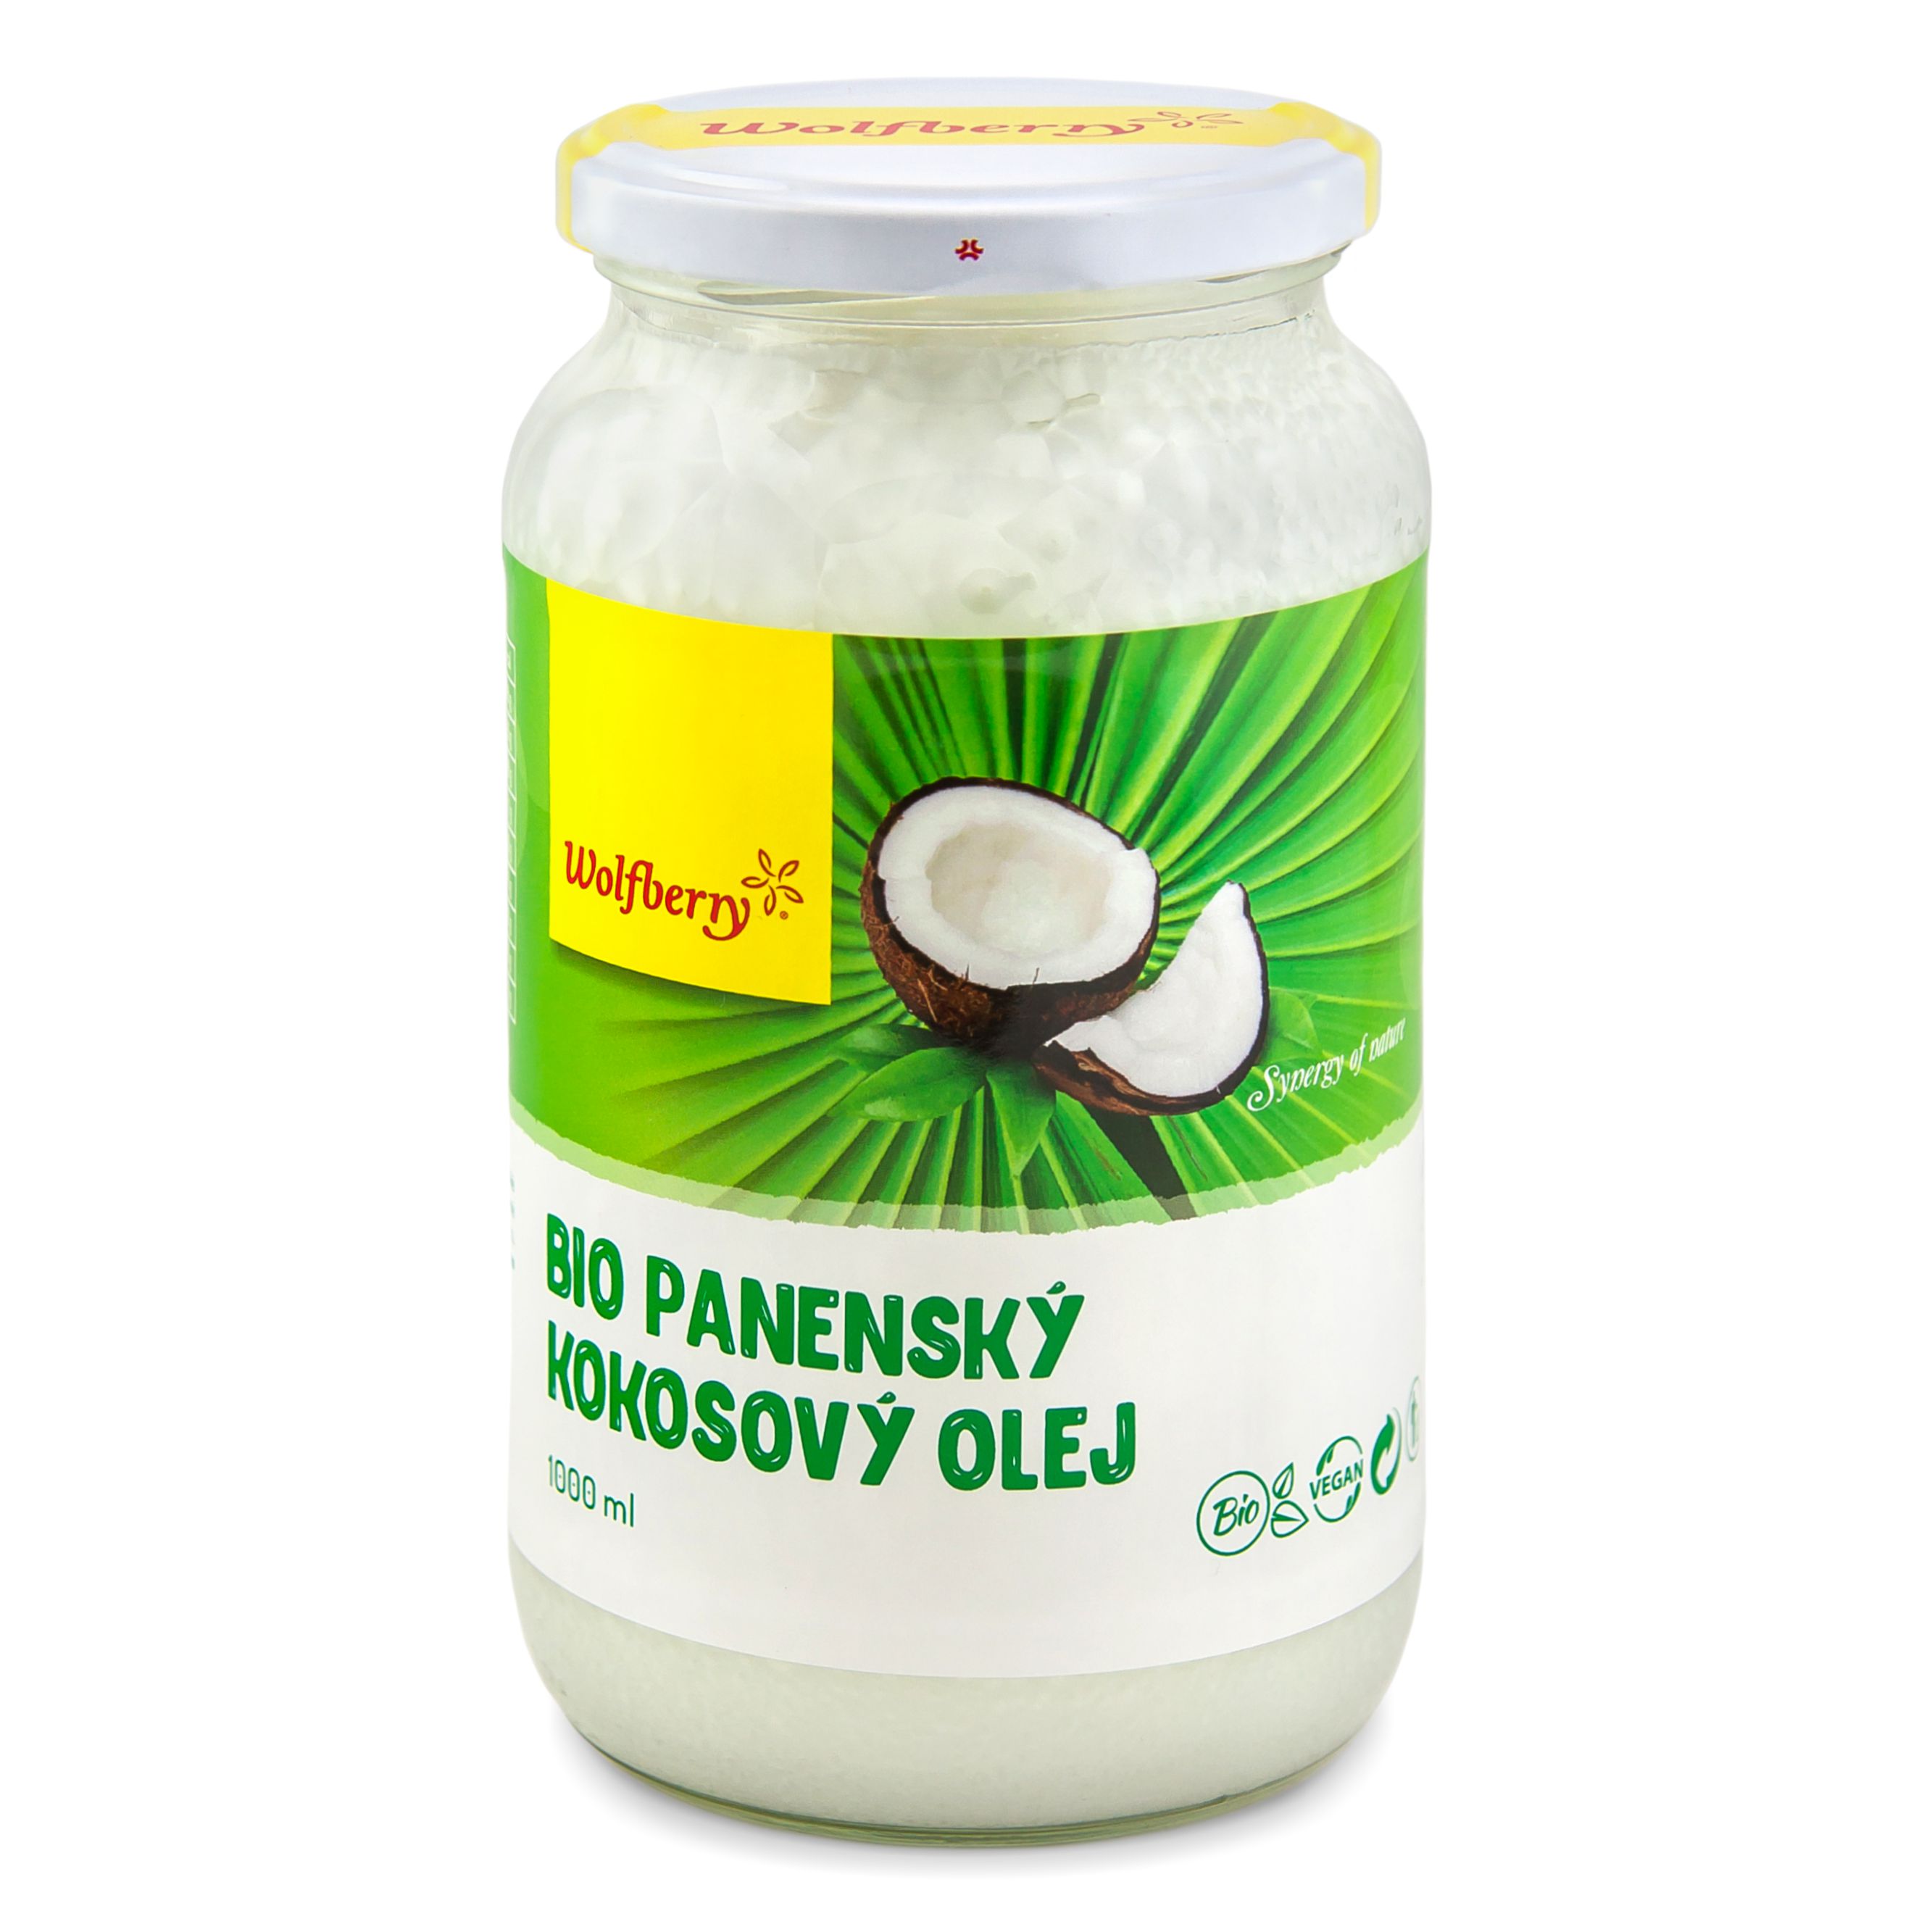 Wolfberry Panenský kokosový olej BIO 1000 ml Wolfberry * 1000ml